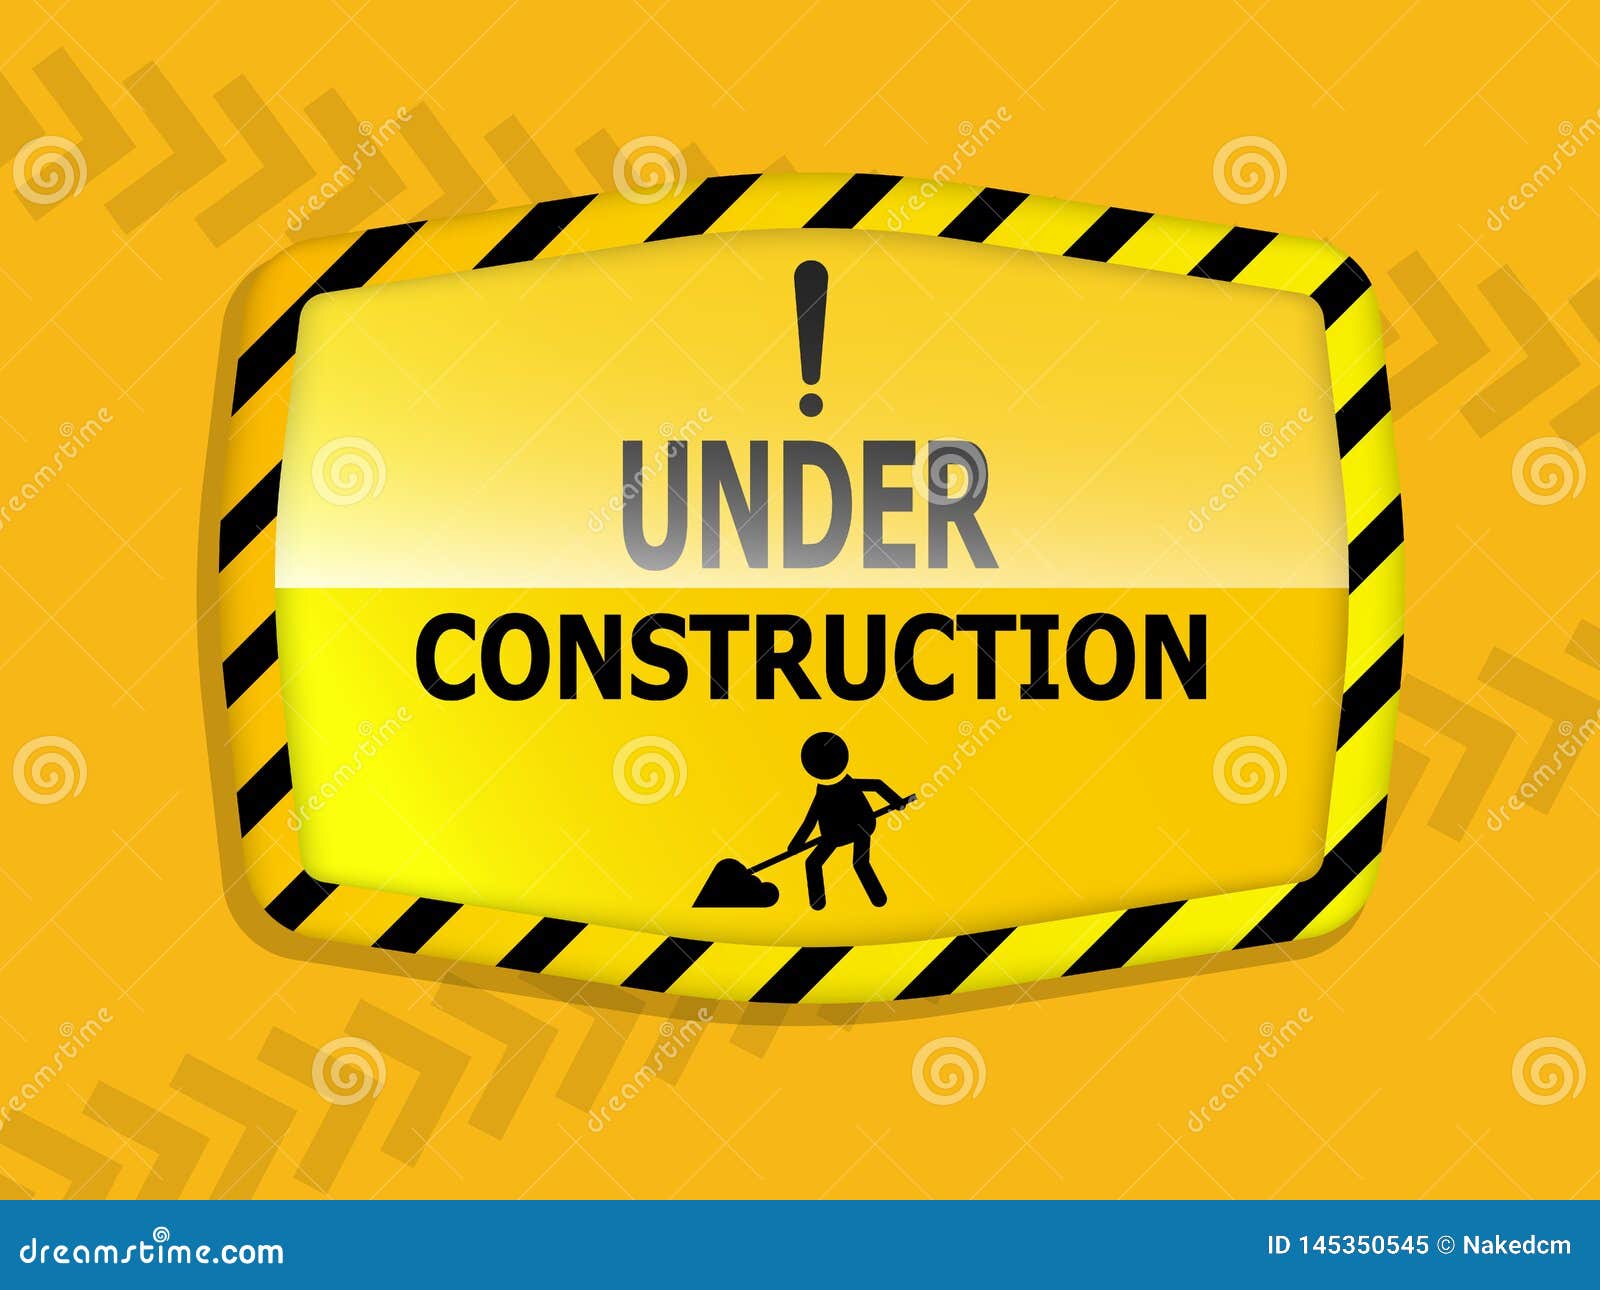 Under construction label stock vector. Illustration of alert - 145350545